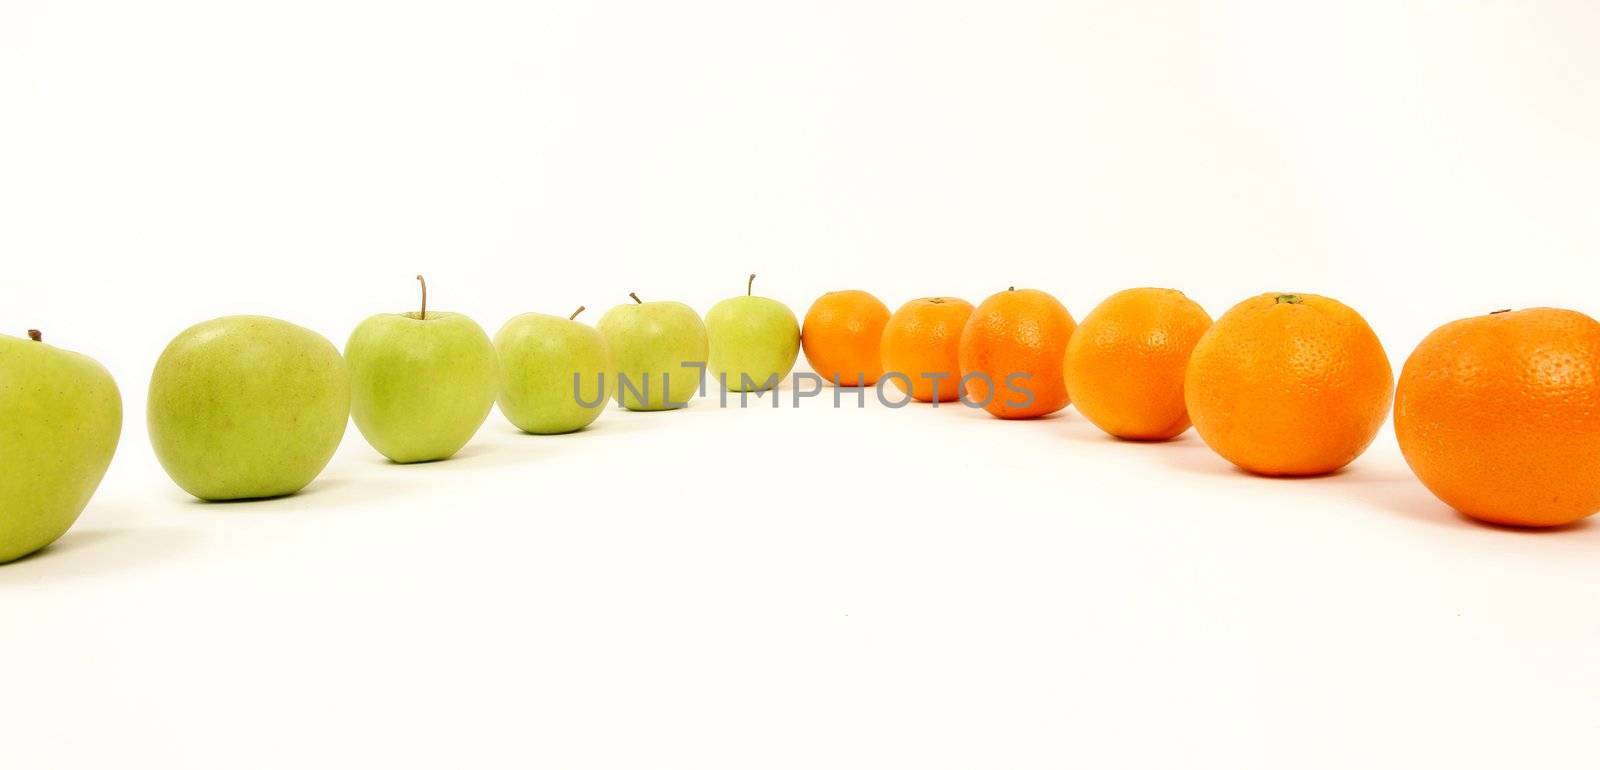 apple and oranges arranged to symbolize leadership, teamwork, network, discrimination............